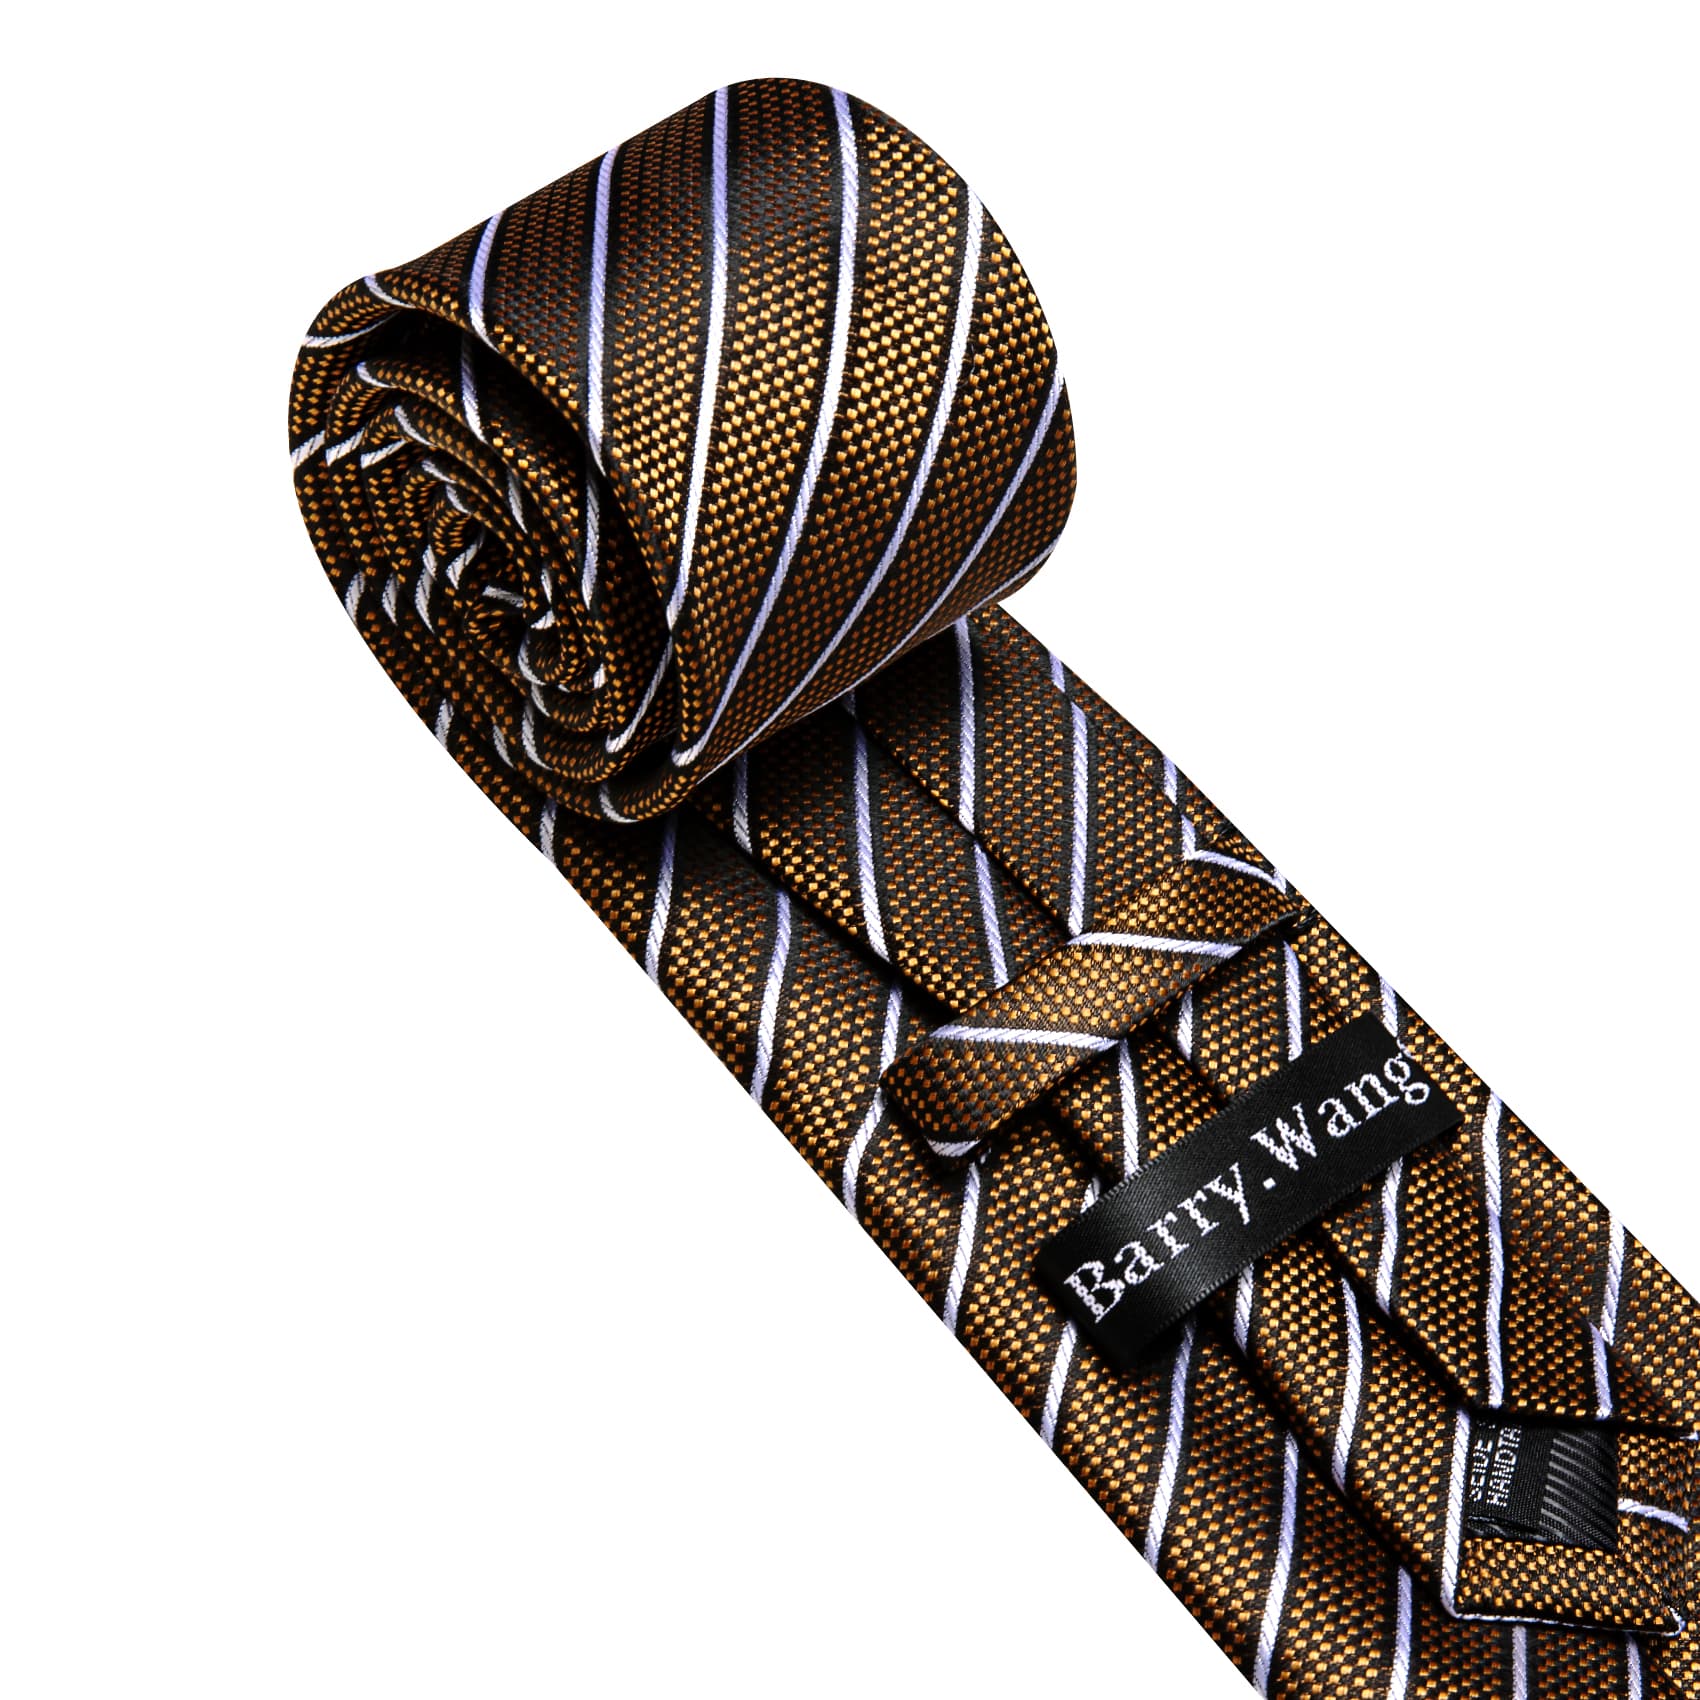 Gold Dots Tie Black White Lines Necktie Men's Tie Set